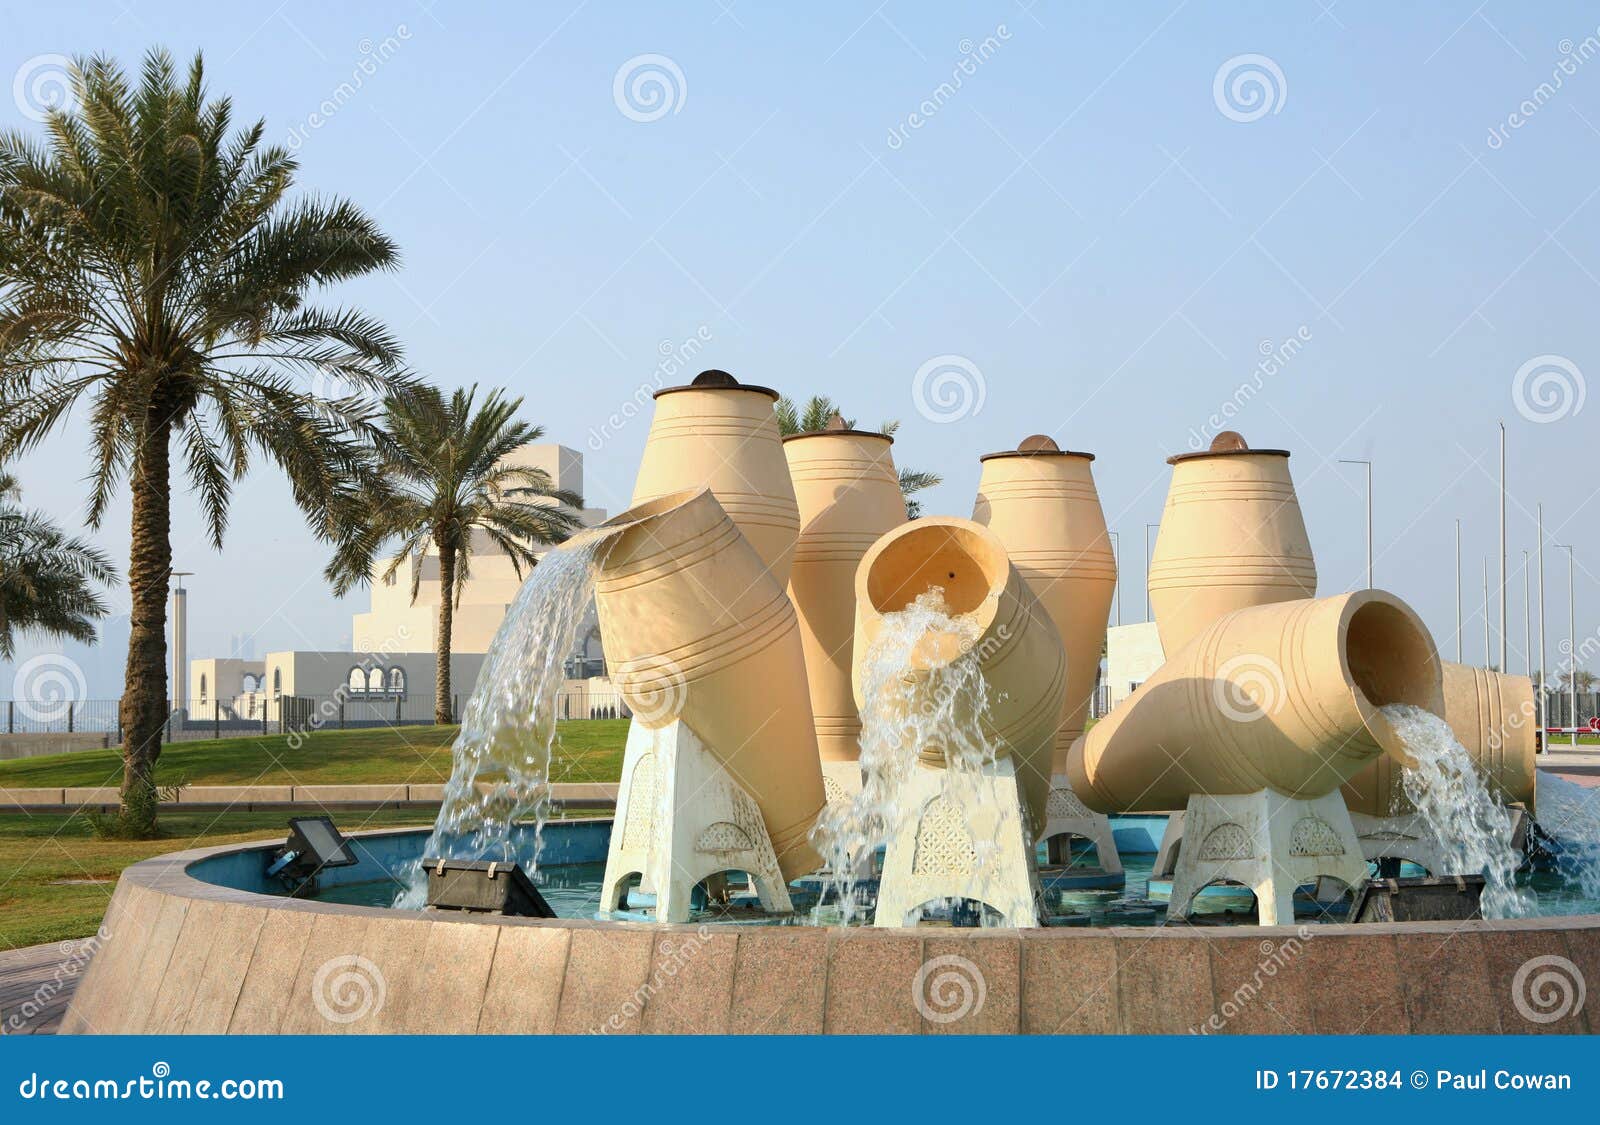 water pot feature, doha, qatar